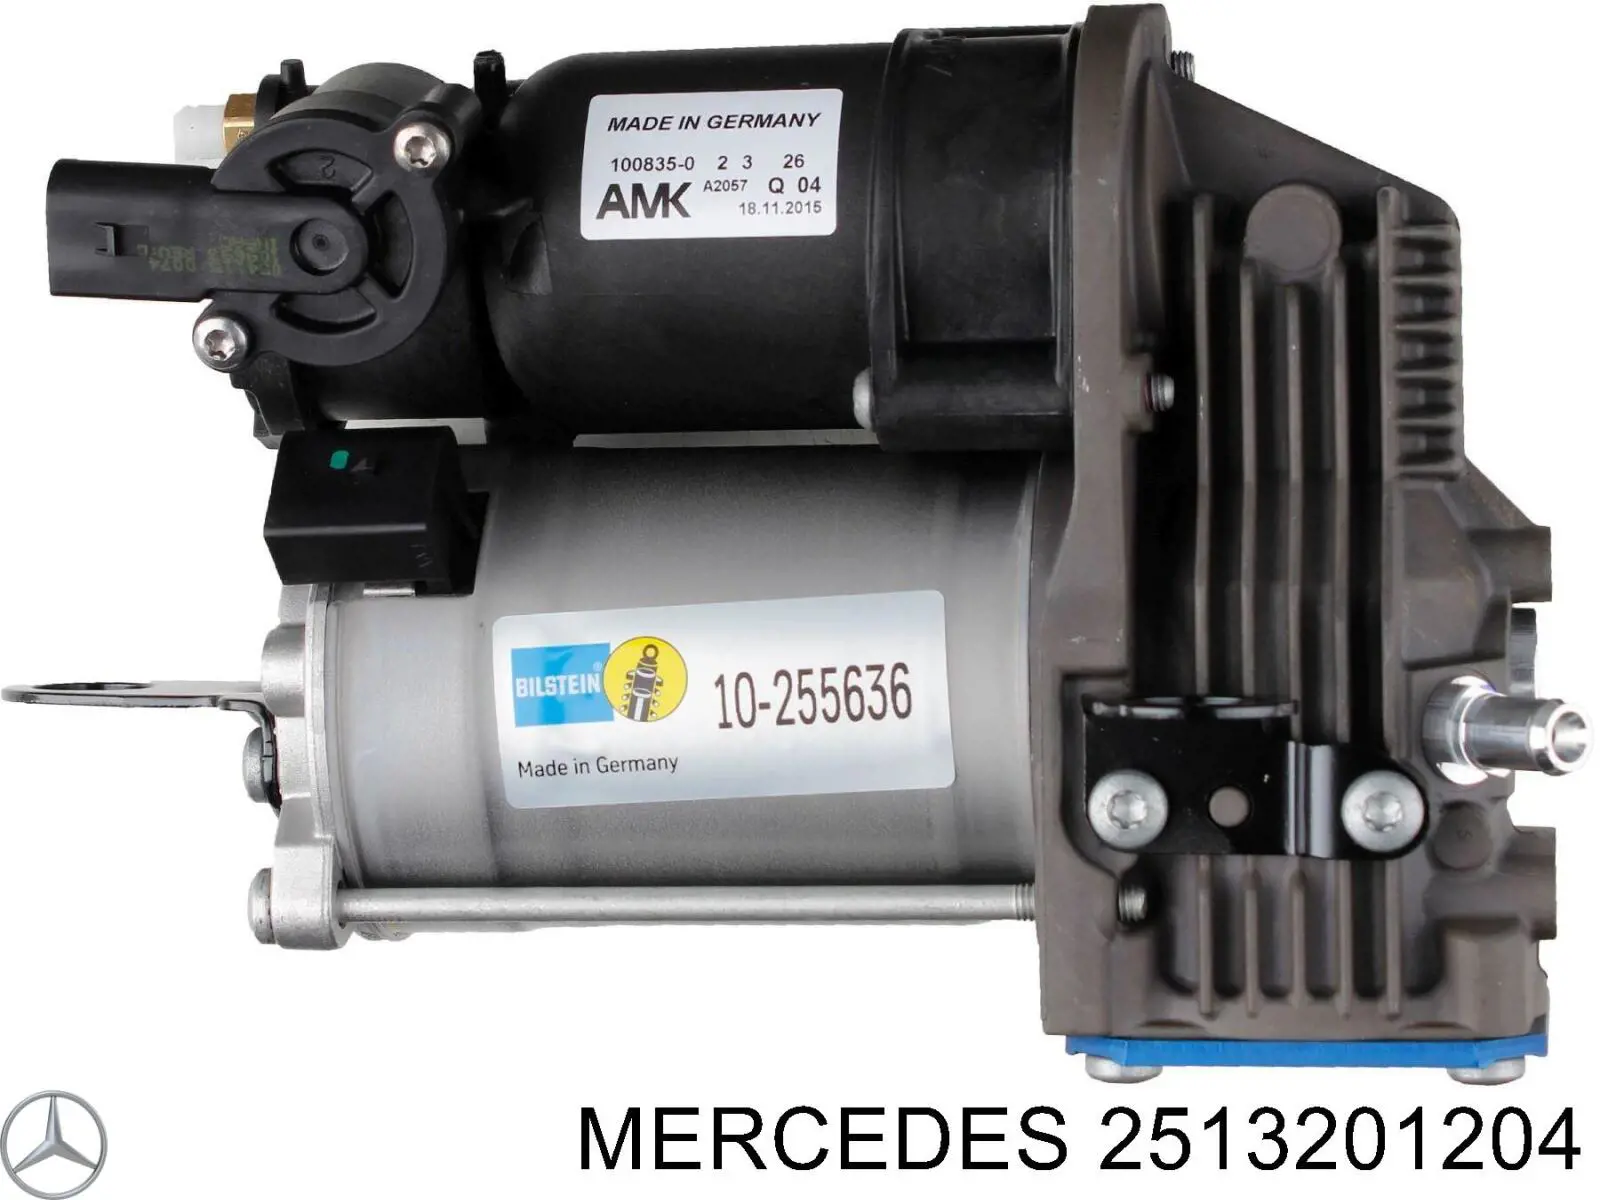 2513201204 Mercedes компрессор пневмоподкачки (амортизаторов)